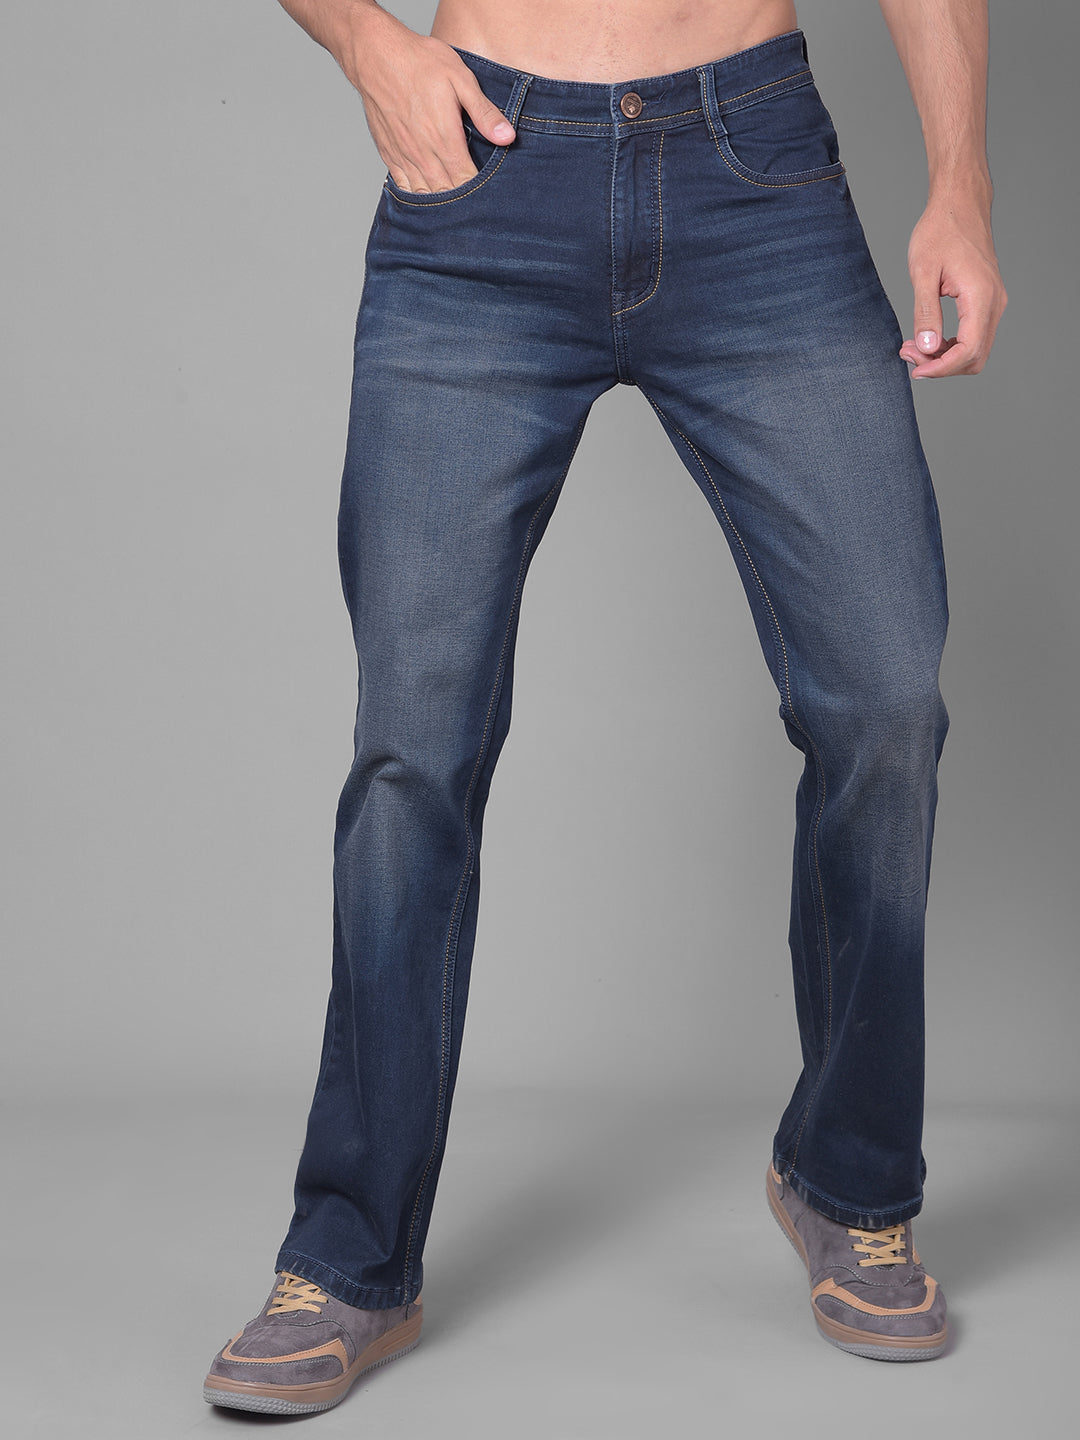 Cobb Epoch Navy Blue Bootcut Premium Jeans